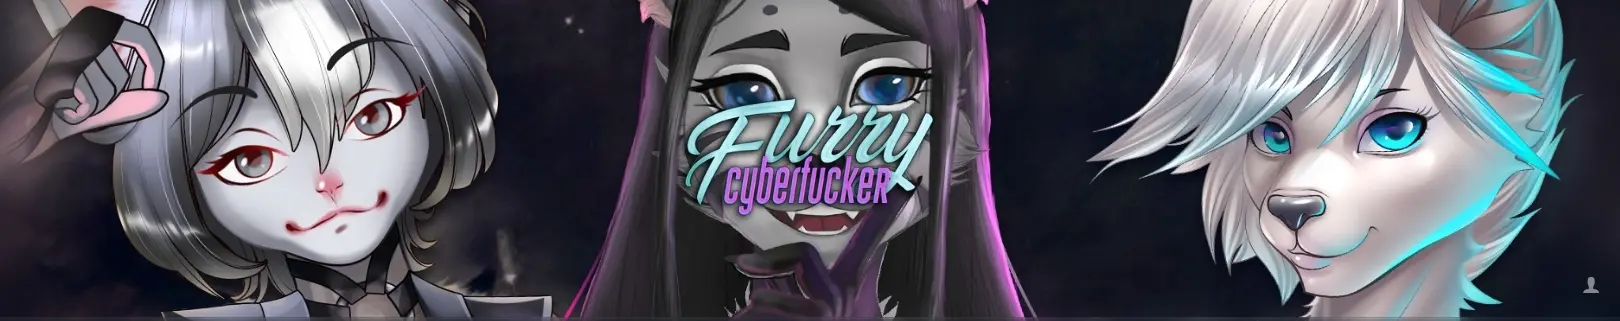 Furry Cyberfucker 1 & 2 main image